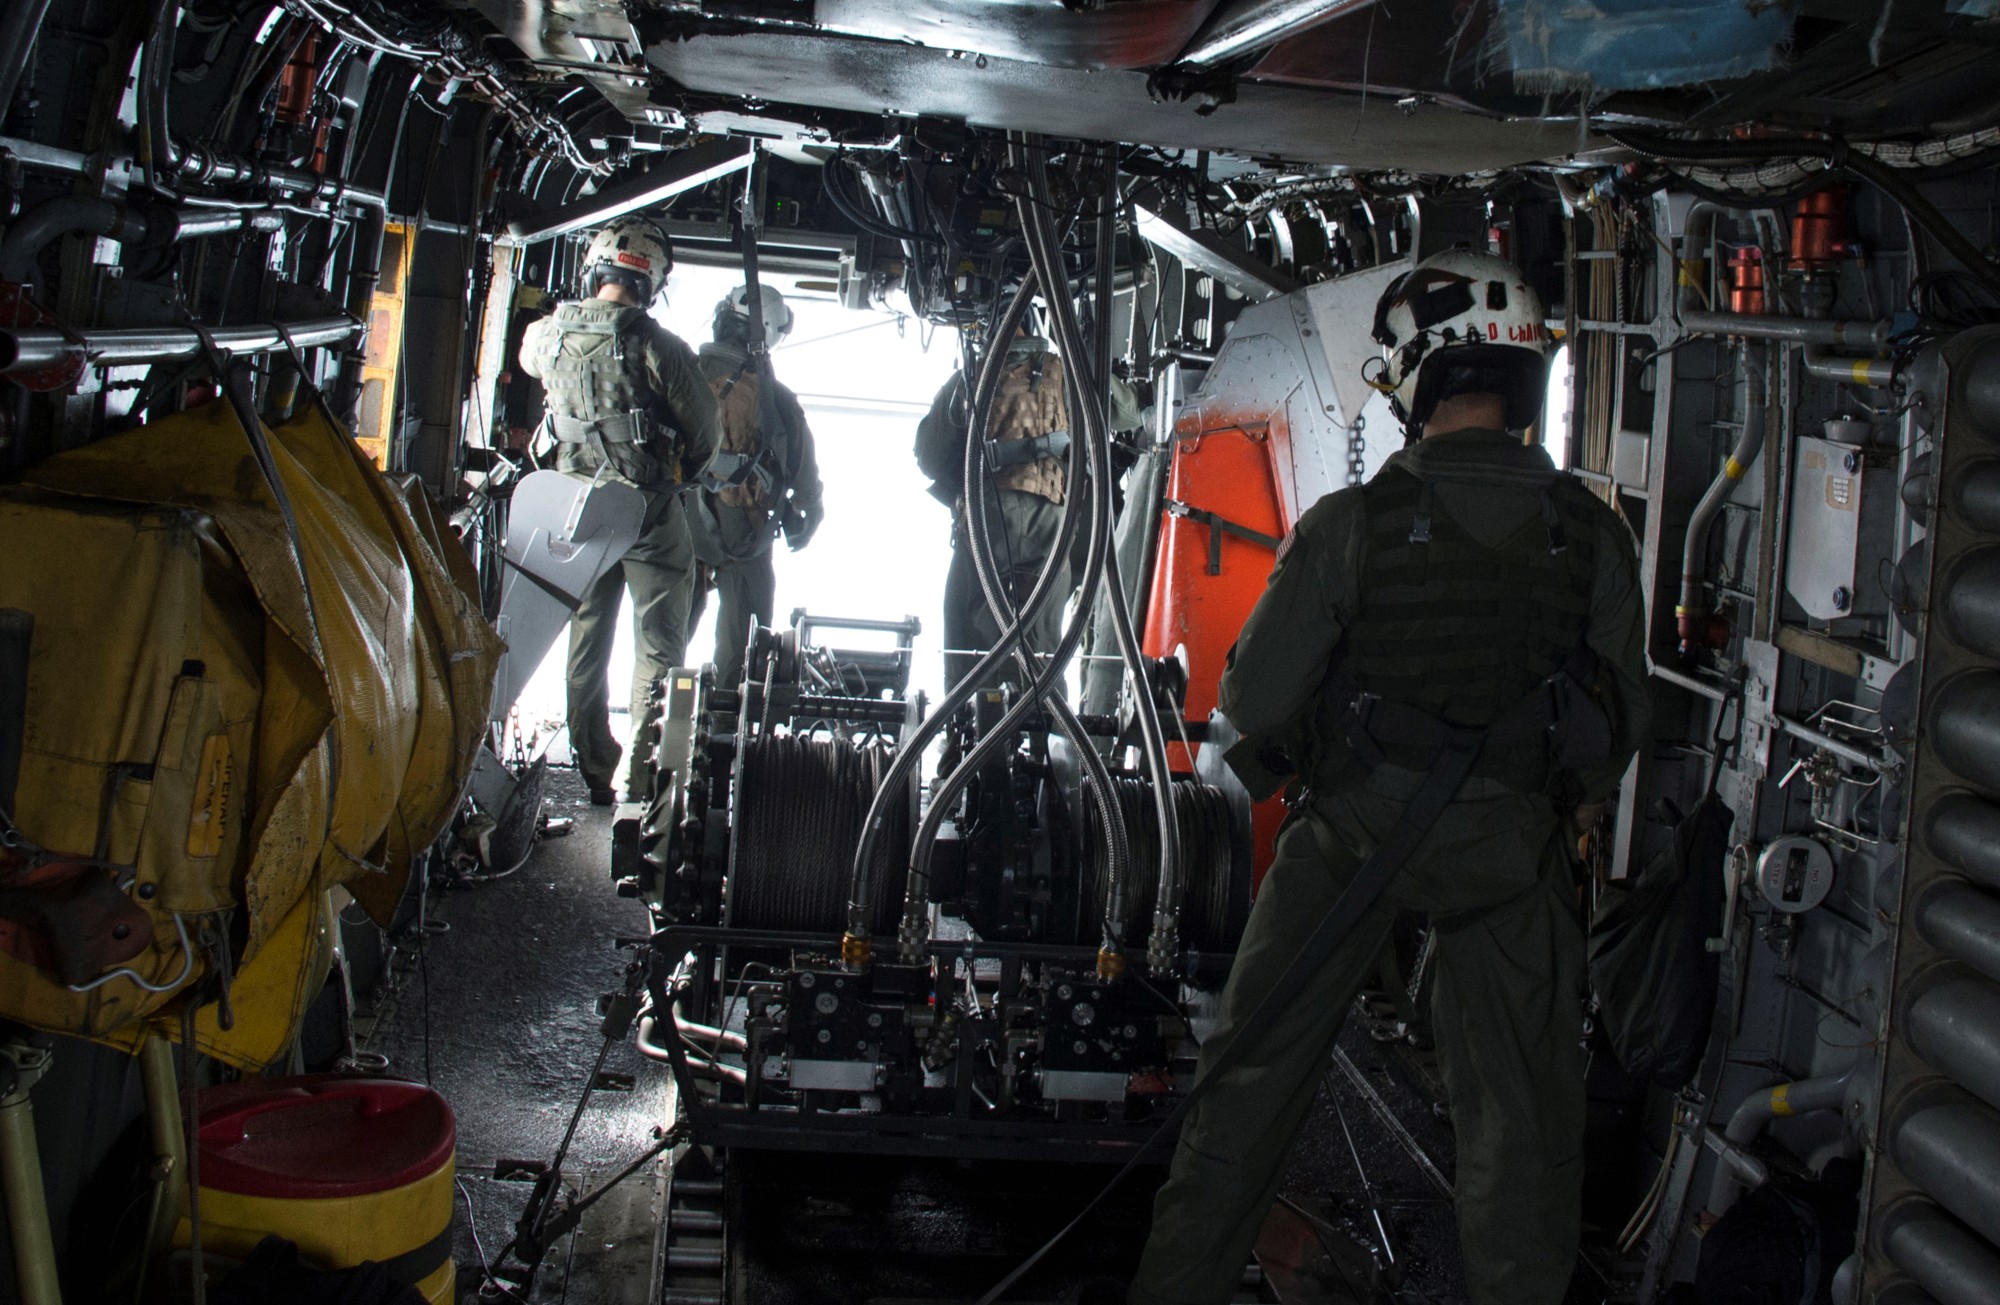 hm-15 blackhawks helicopter mine countermeasures squadron navy mh-53e sea dragon 125 mcm equipment